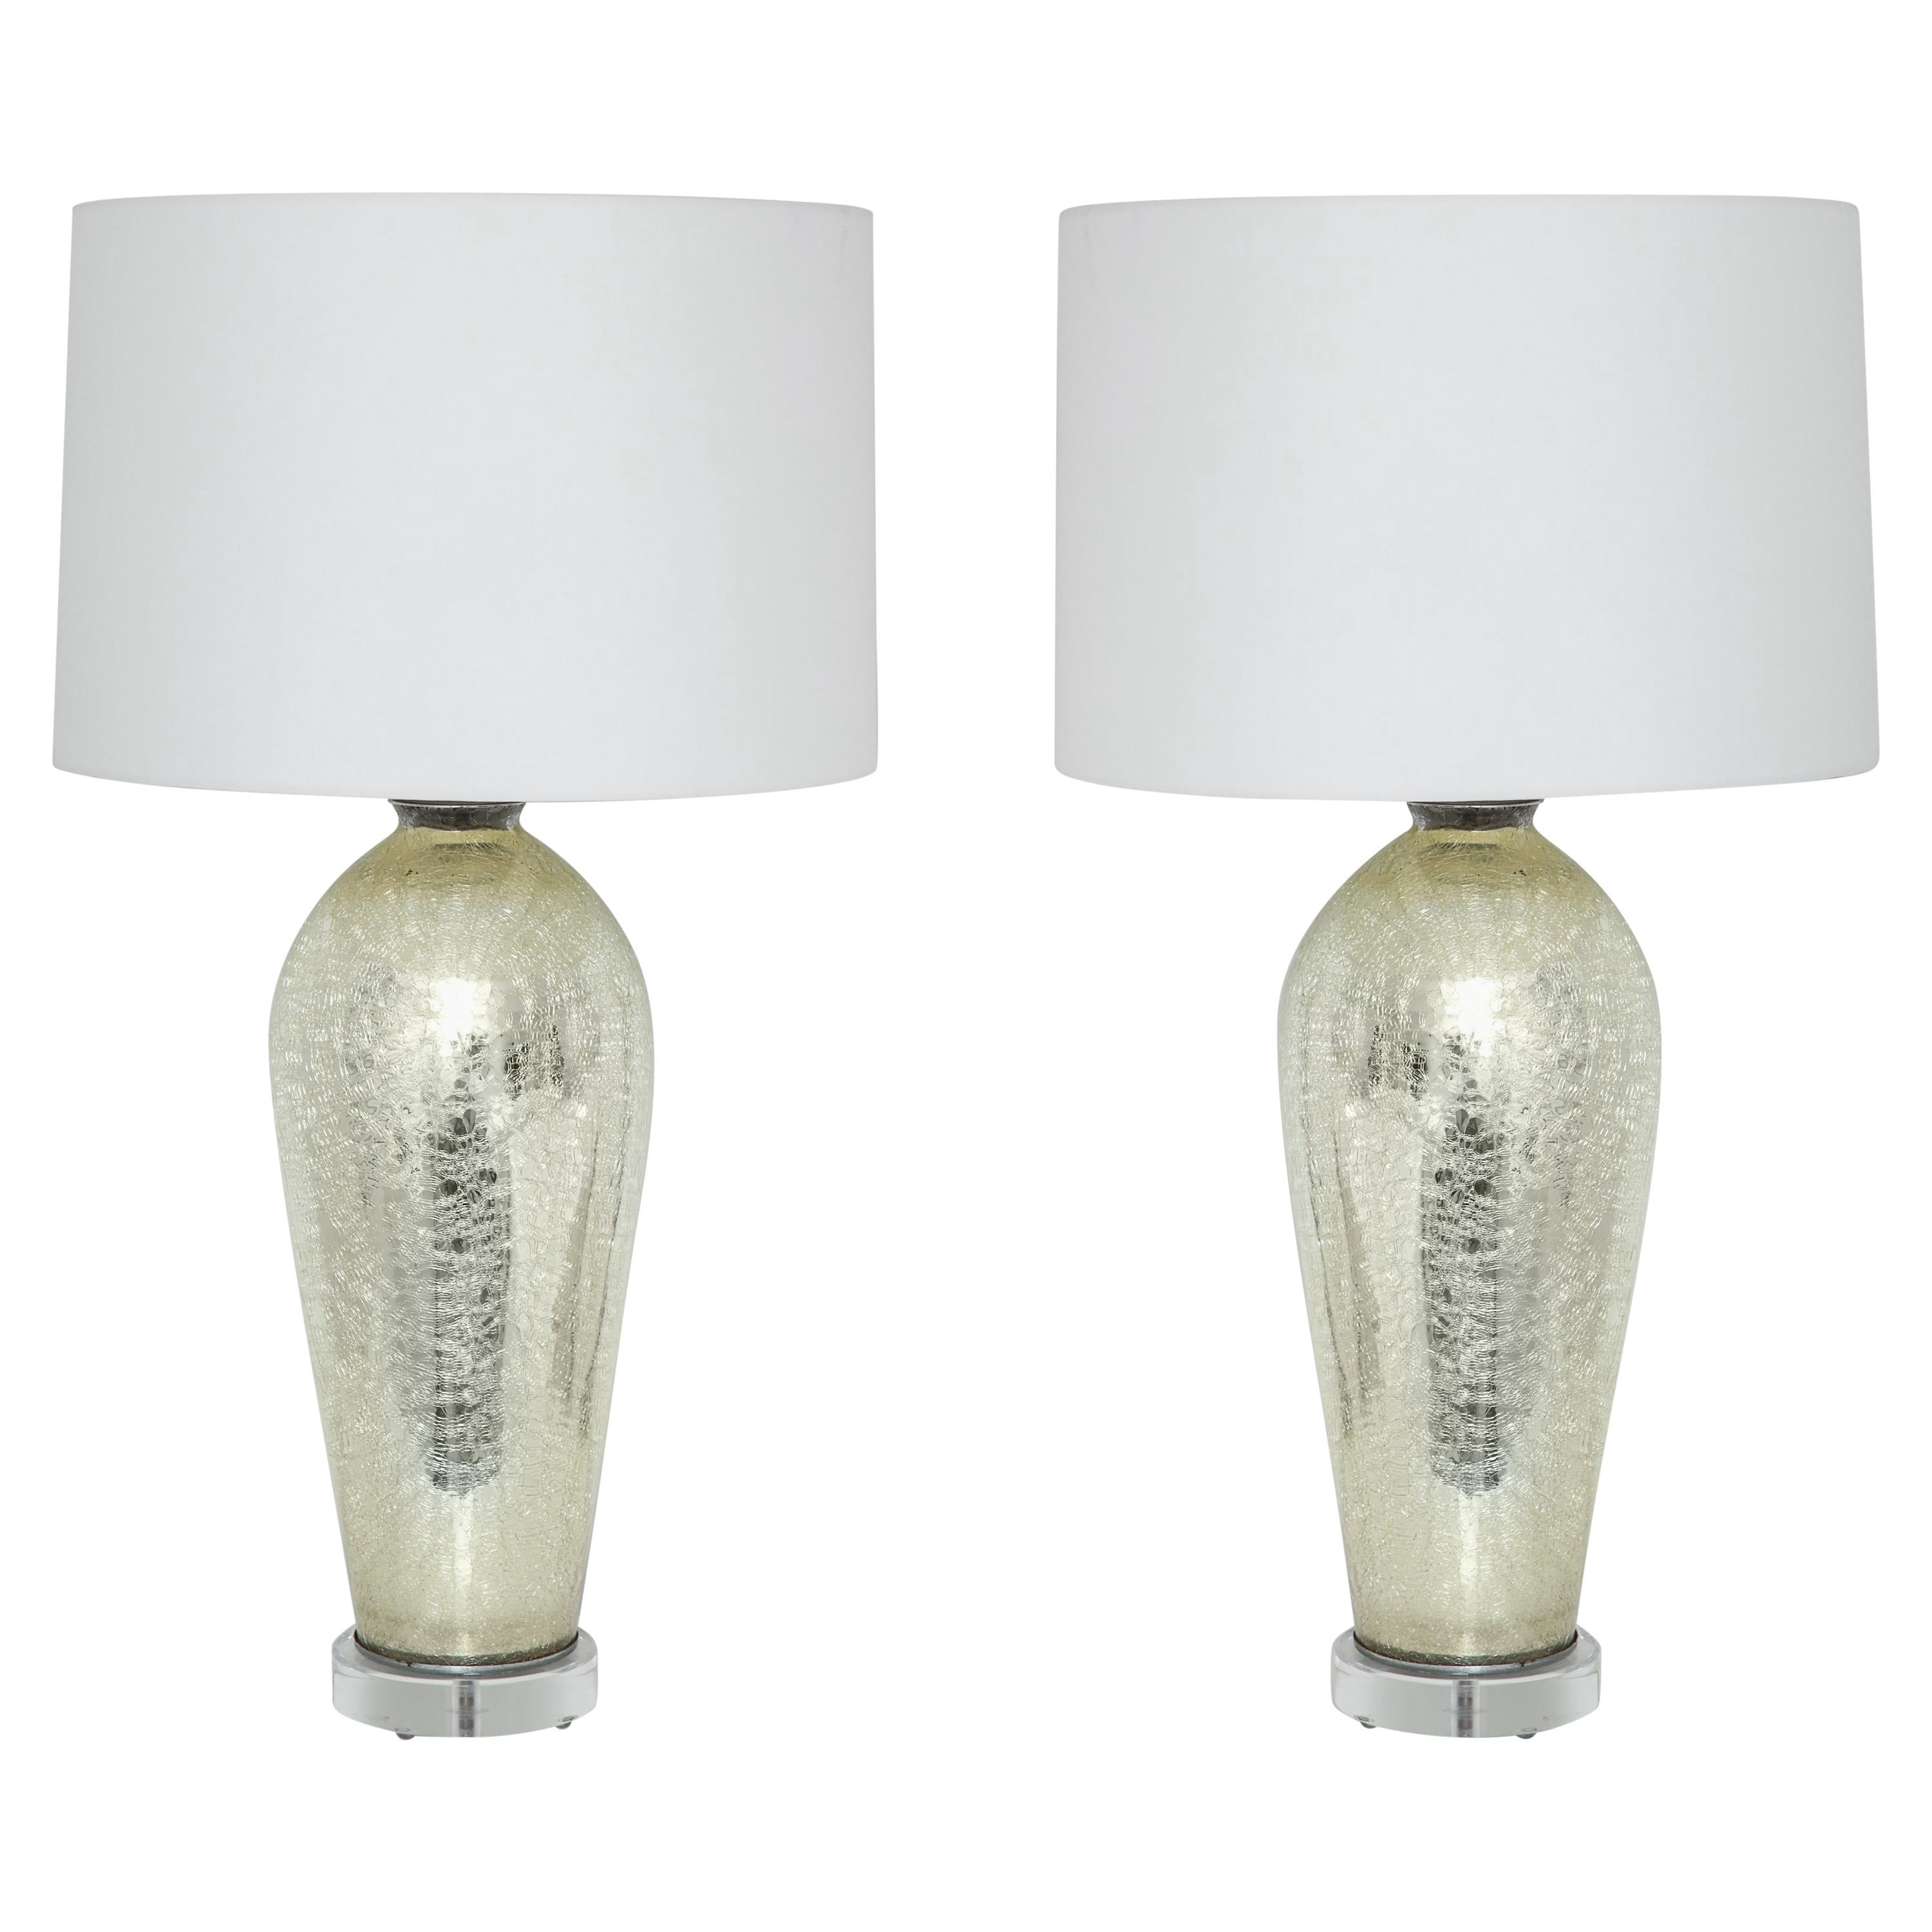 Pair of Midcentury Antiqued Mirrored Lamps